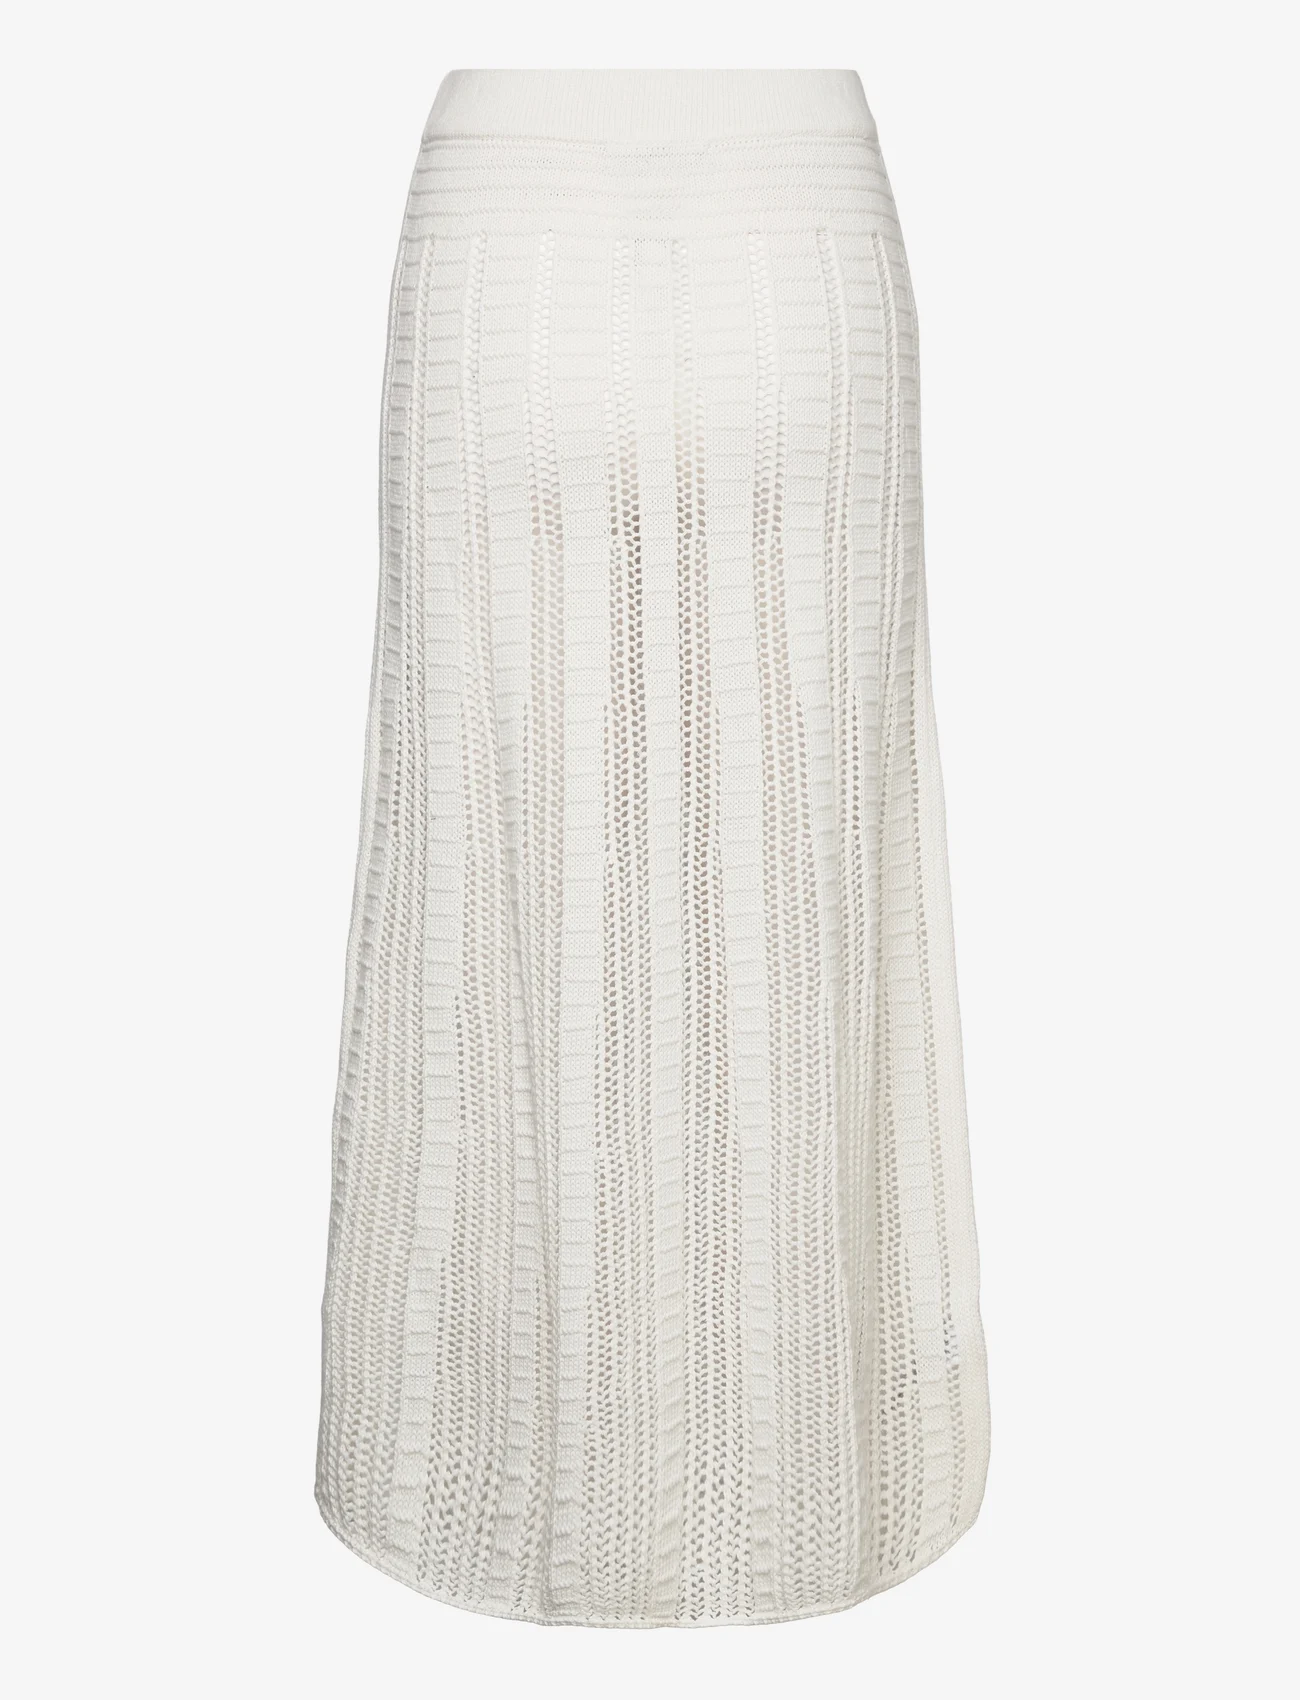 Mango - Knitted skirt with openwork details - stickade kjolar - white - 1